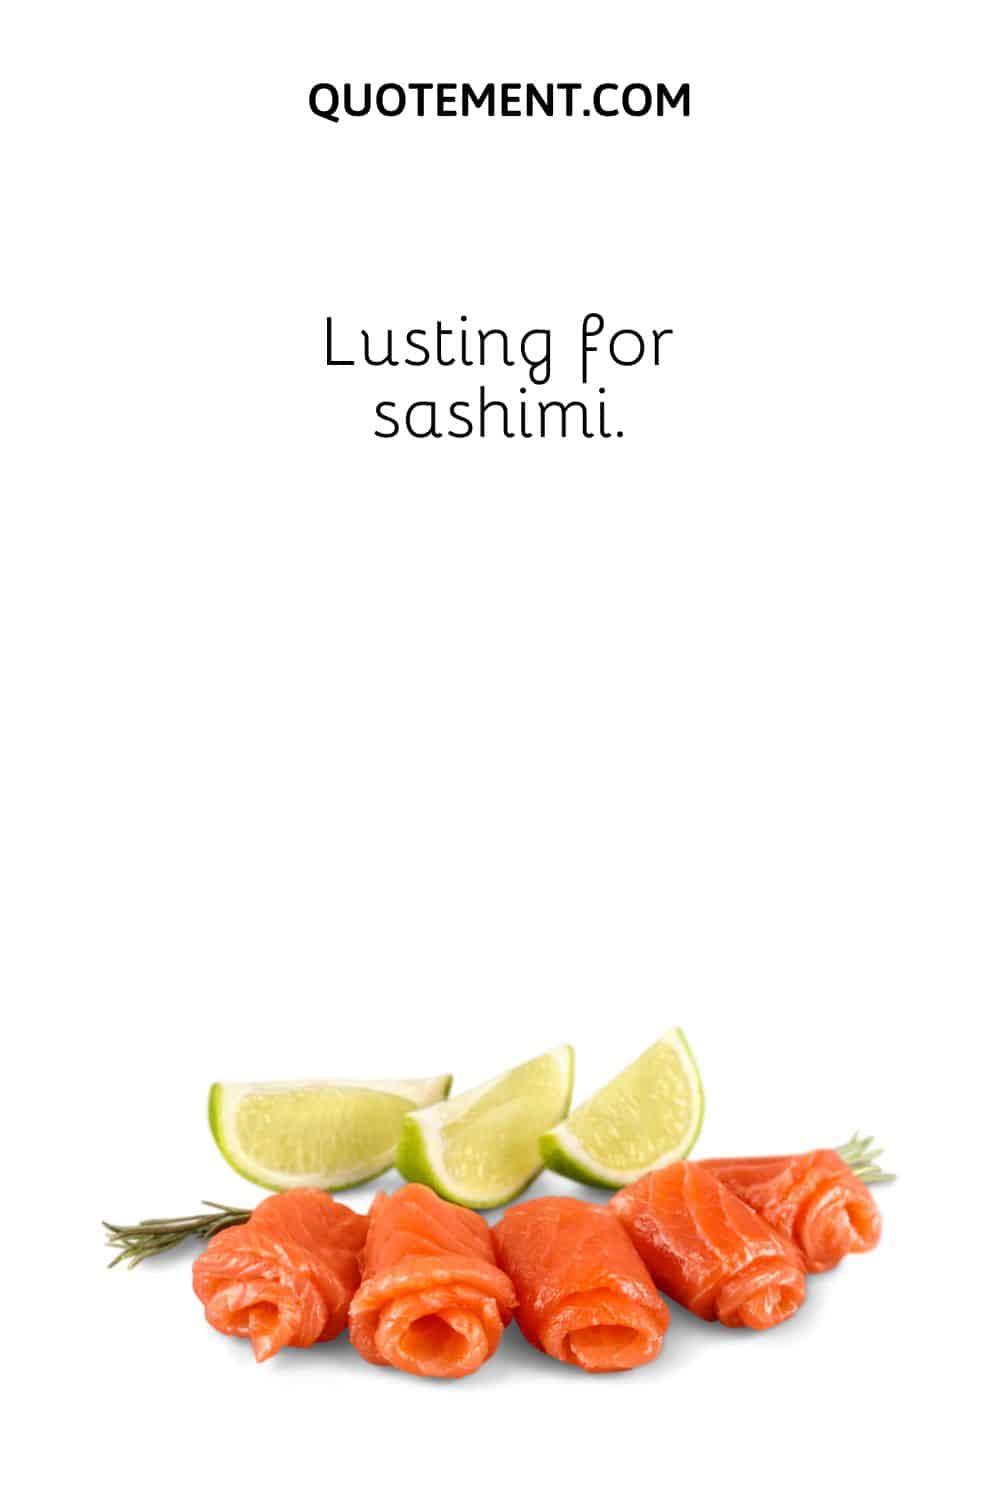 Lusting for sashimi.